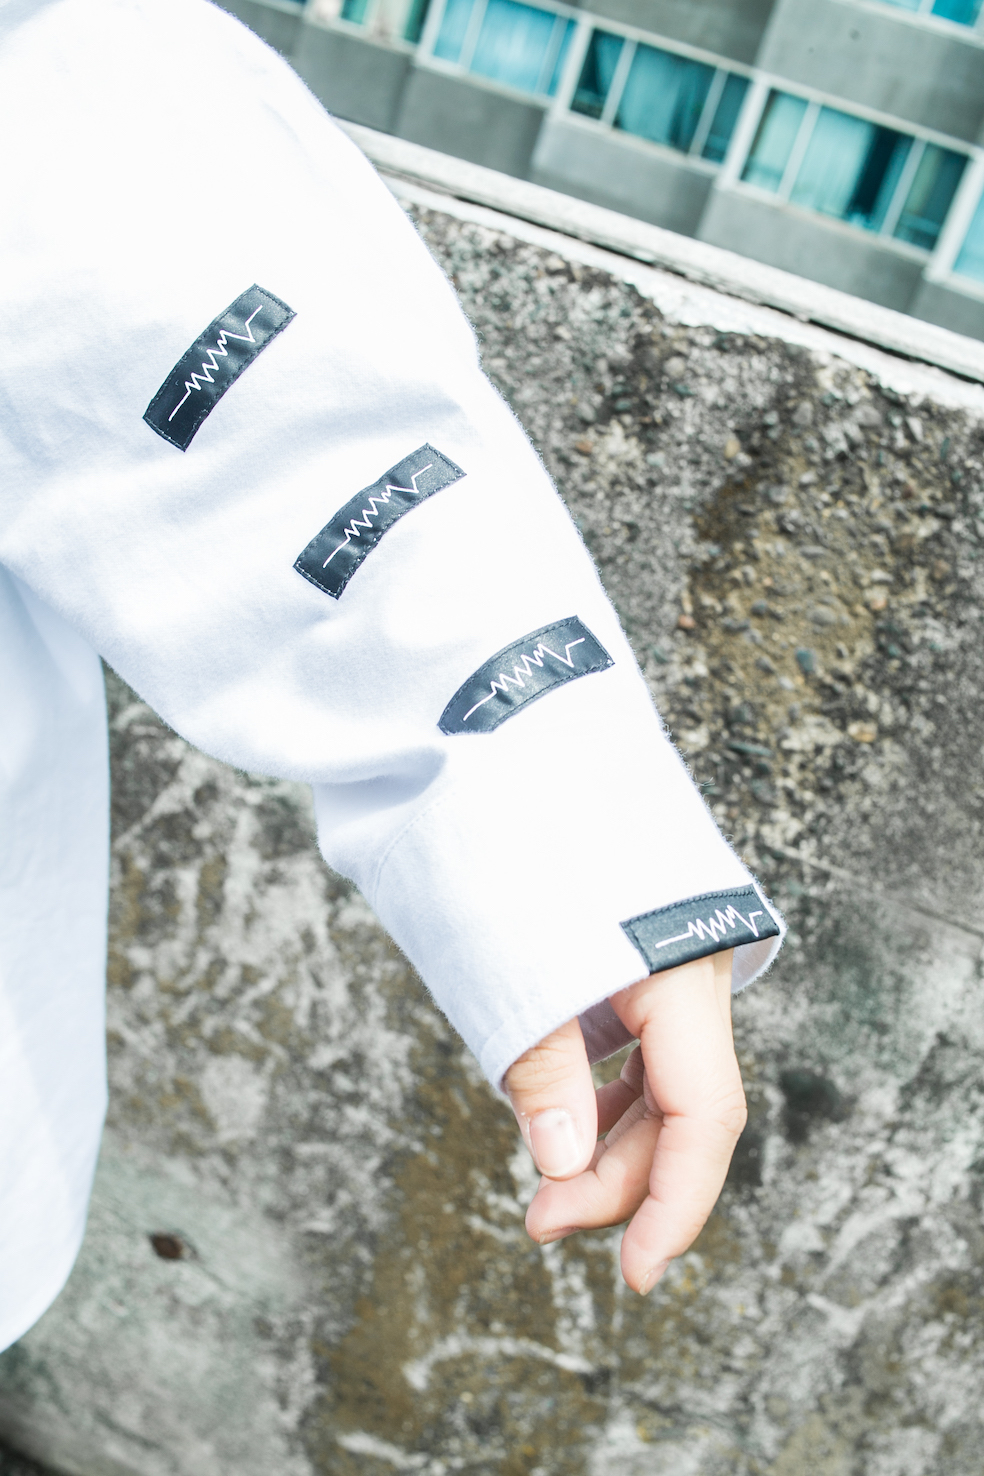 SUSU Original 5th Anniversary 7XL flannel white shirt